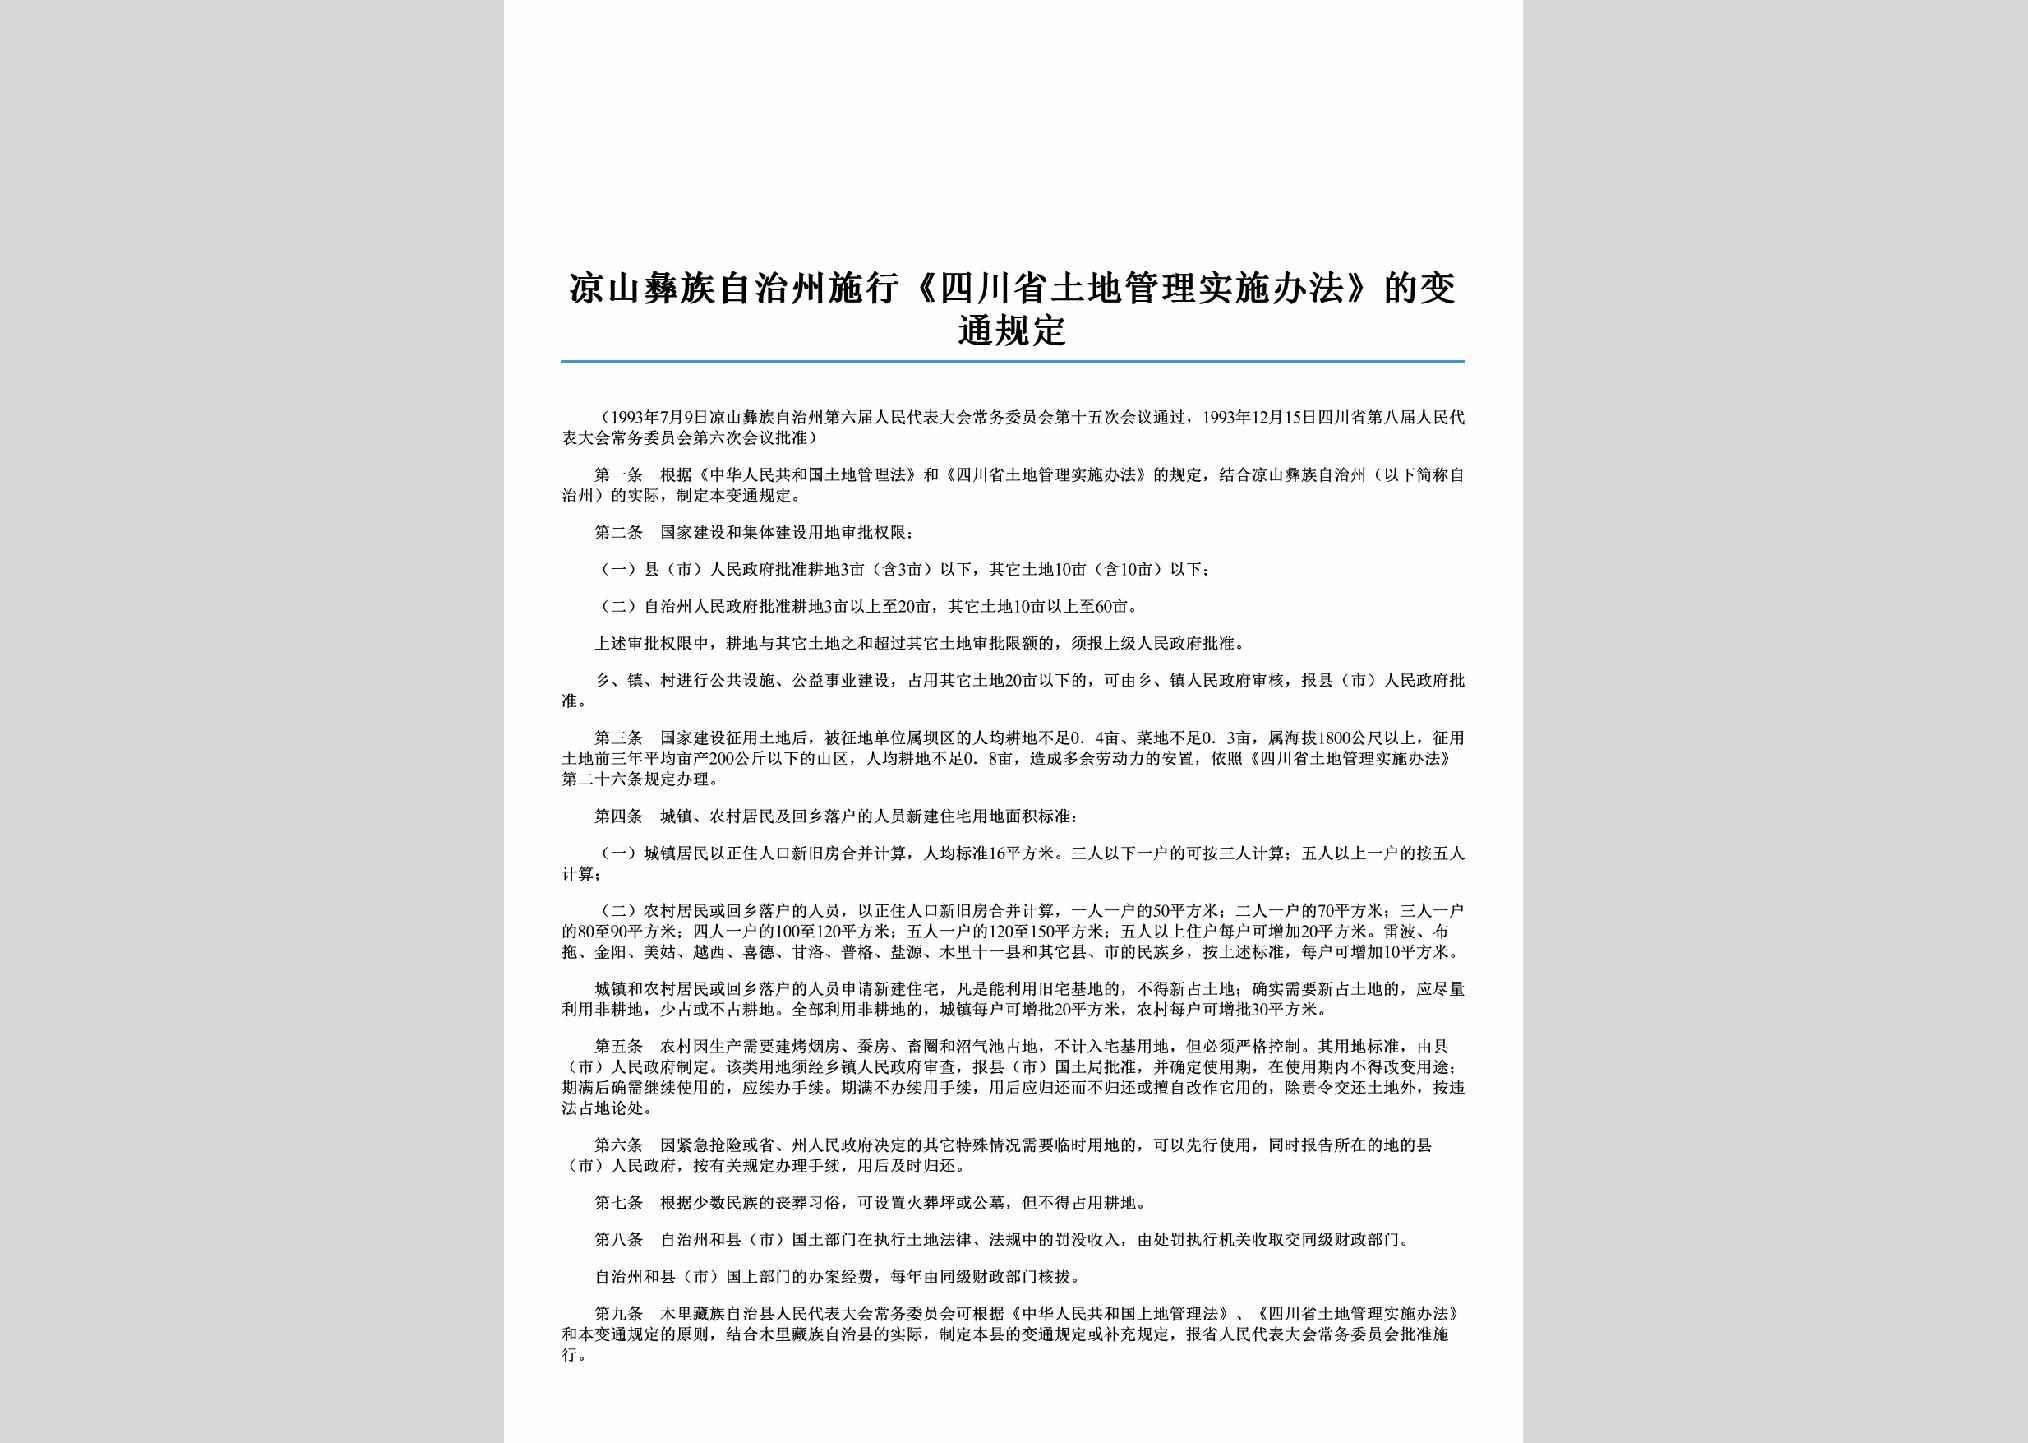 SC-SXTDBTGD-2006：凉山彝族自治州施行《四川省土地管理实施办法》的变通规定